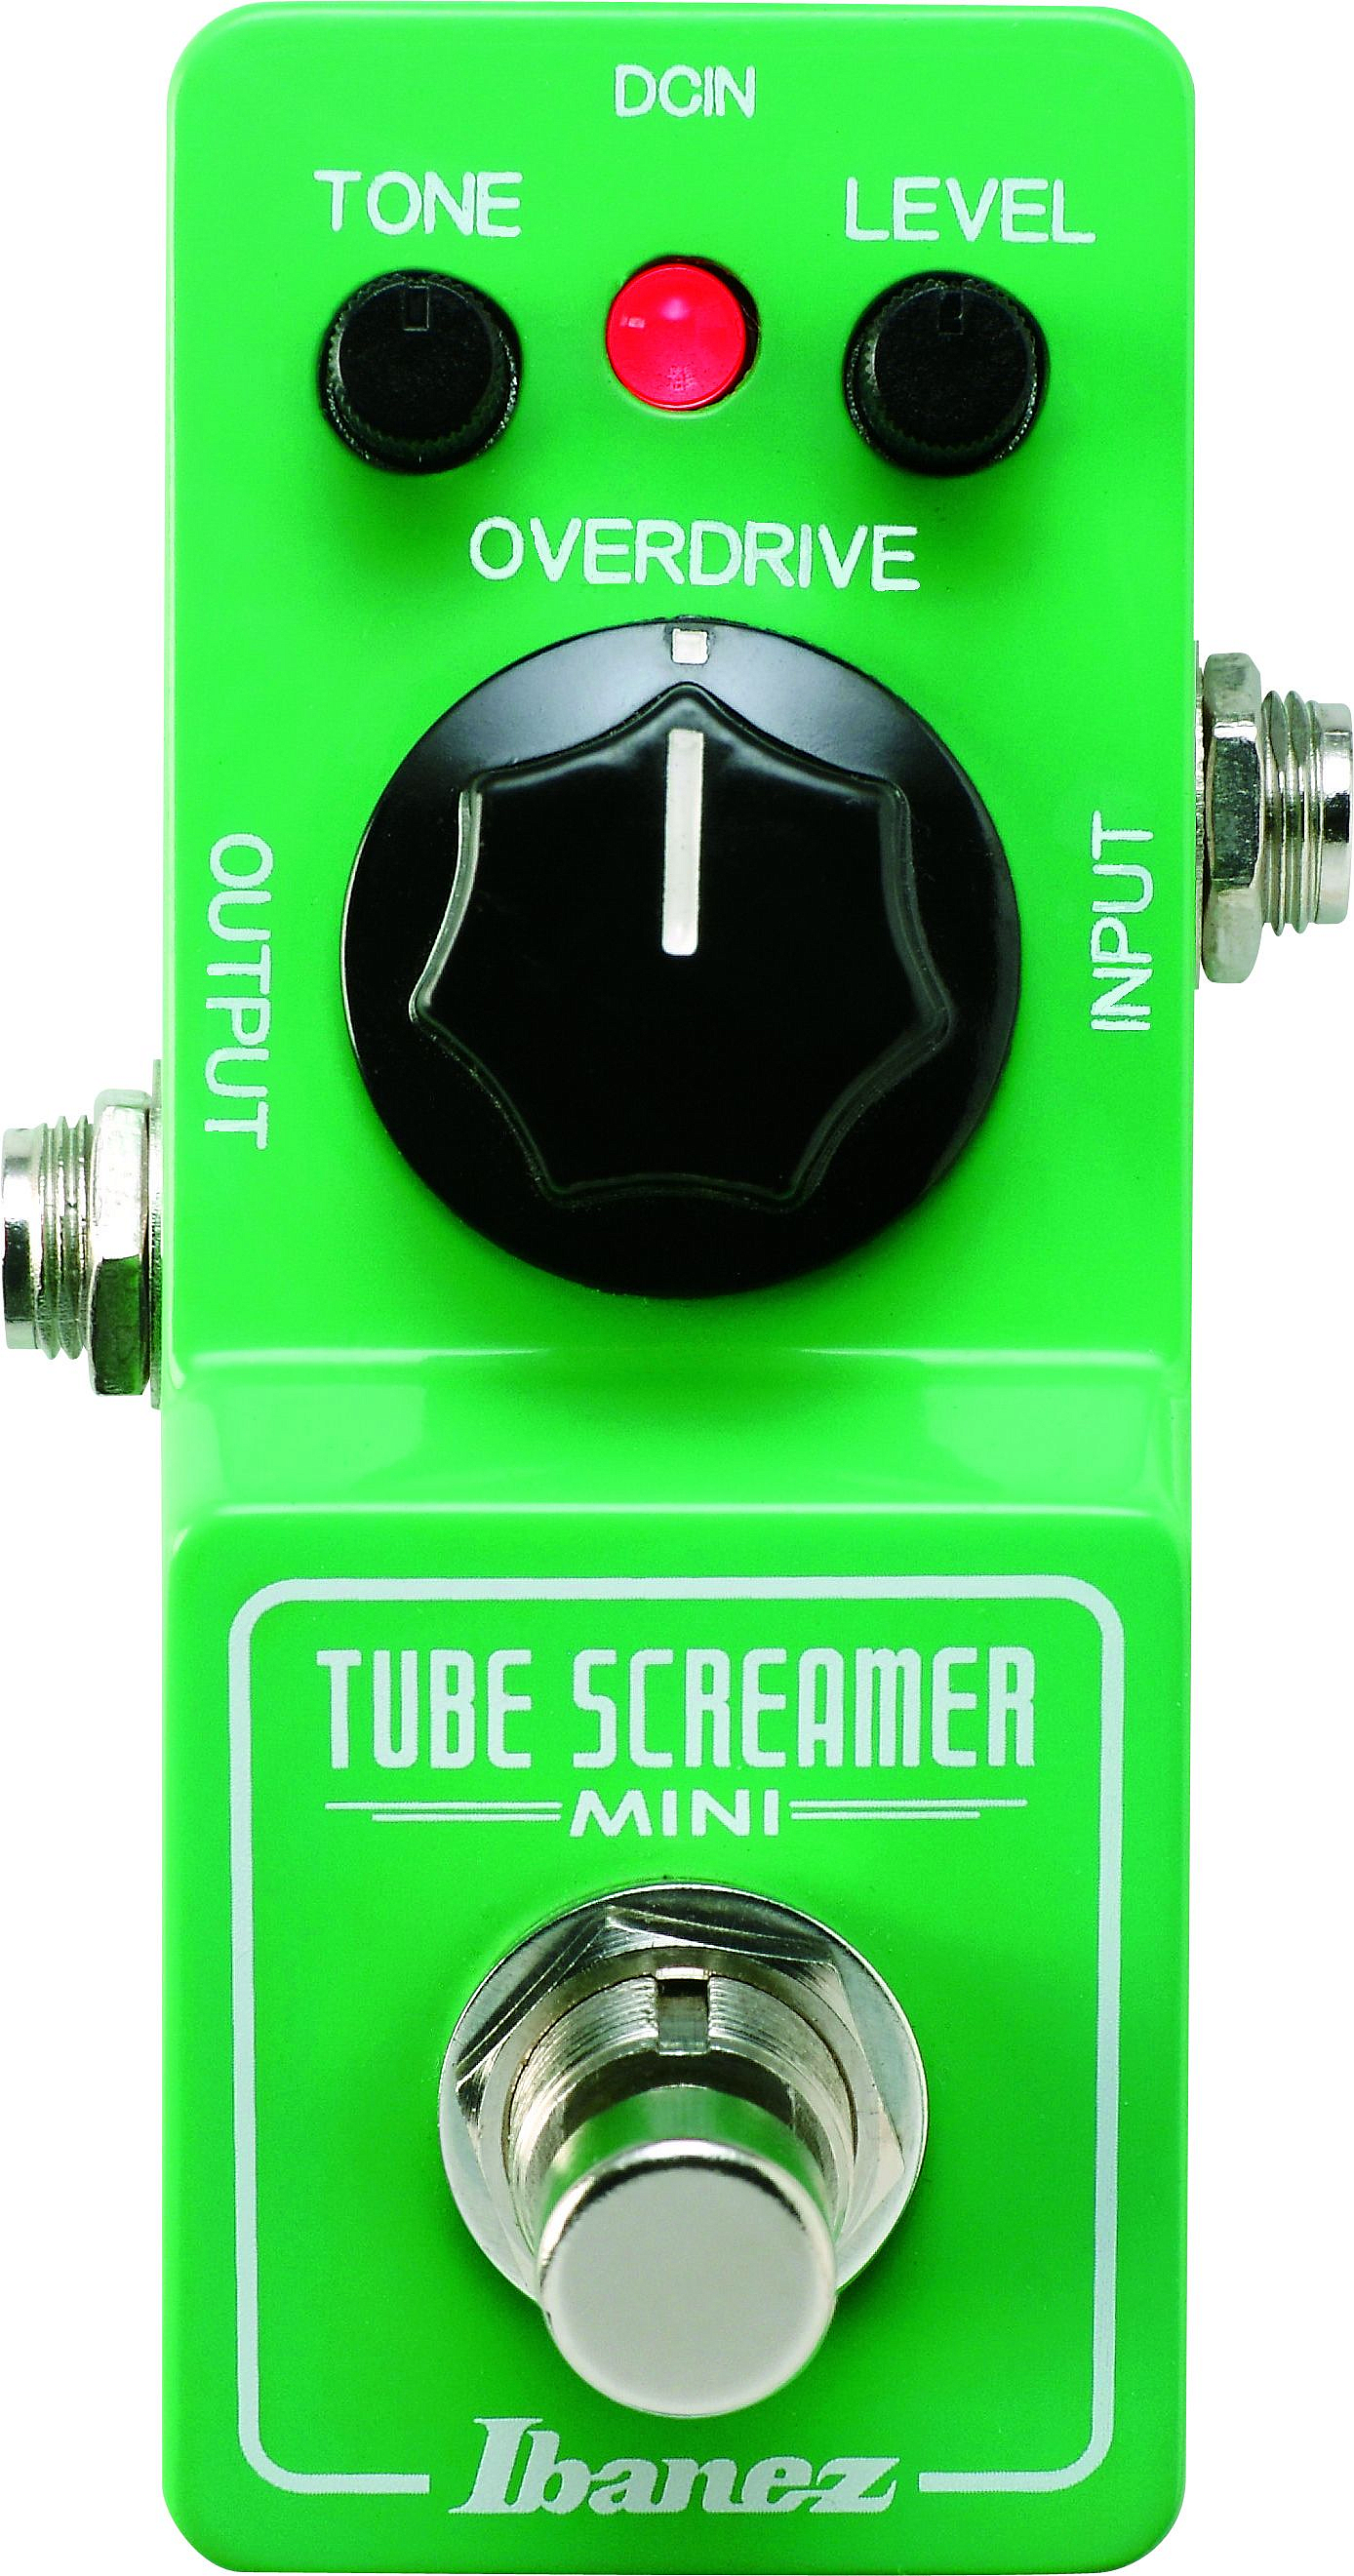 Ibanez TSMINI Tube Screamer Mini педаль эффектов | Продукция IBANEZ